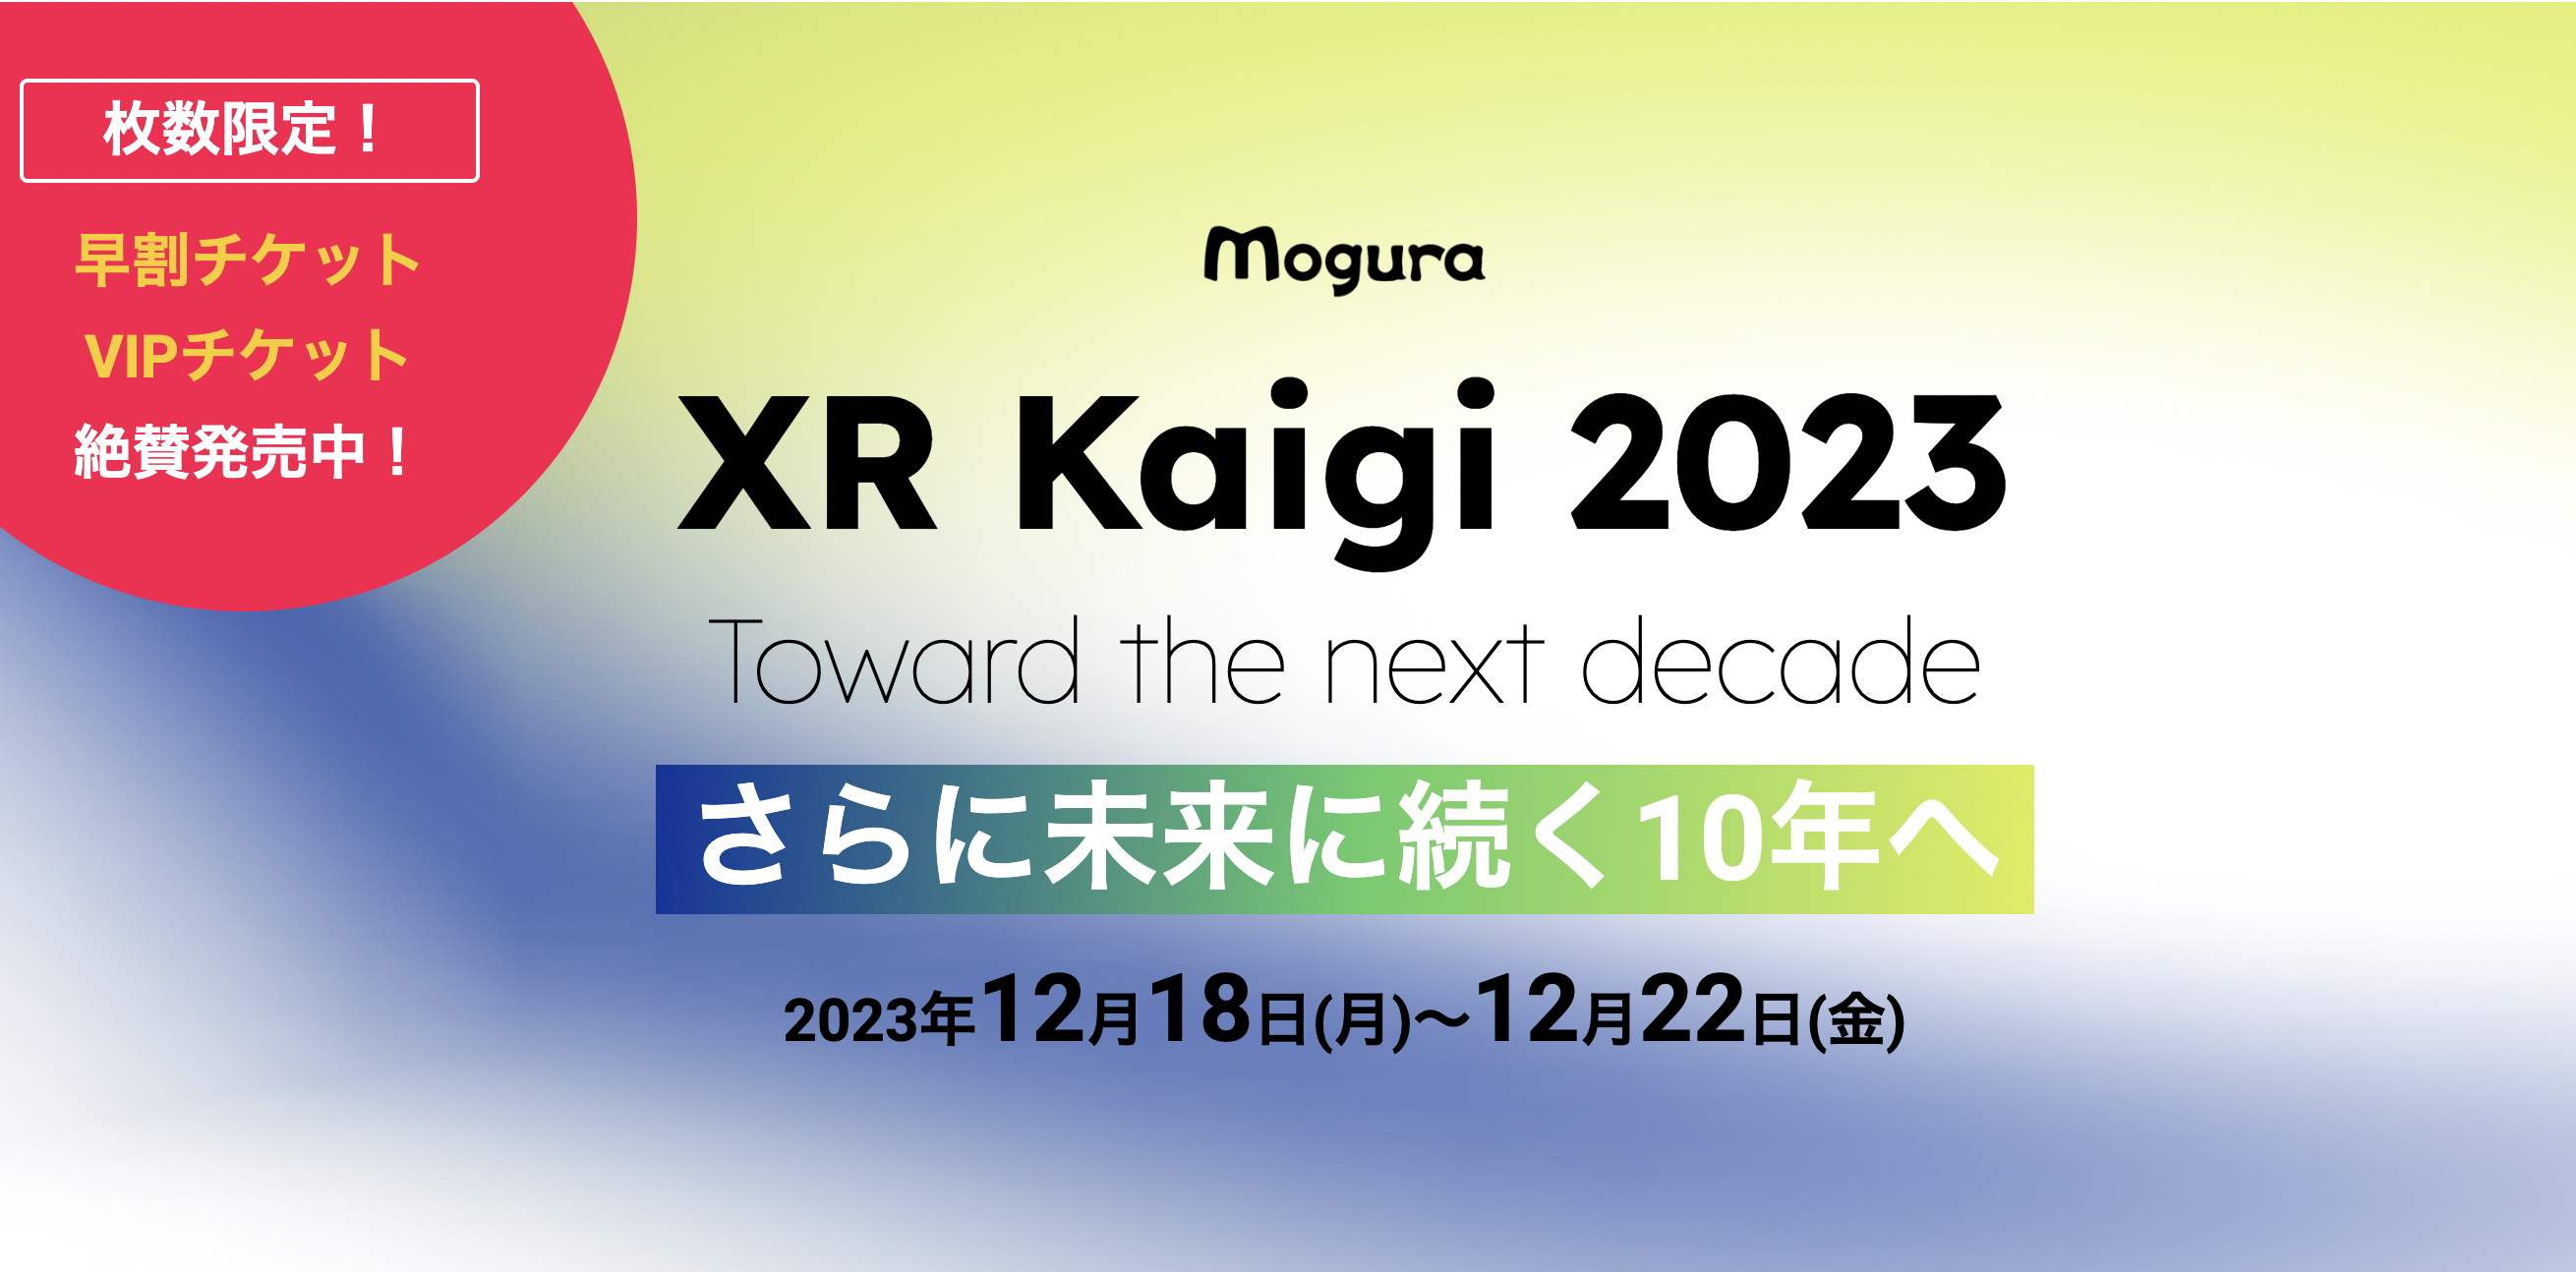 uXR Kaigi 2023 presents Meta Connect 2023 񍐉vJÂ܂yQz